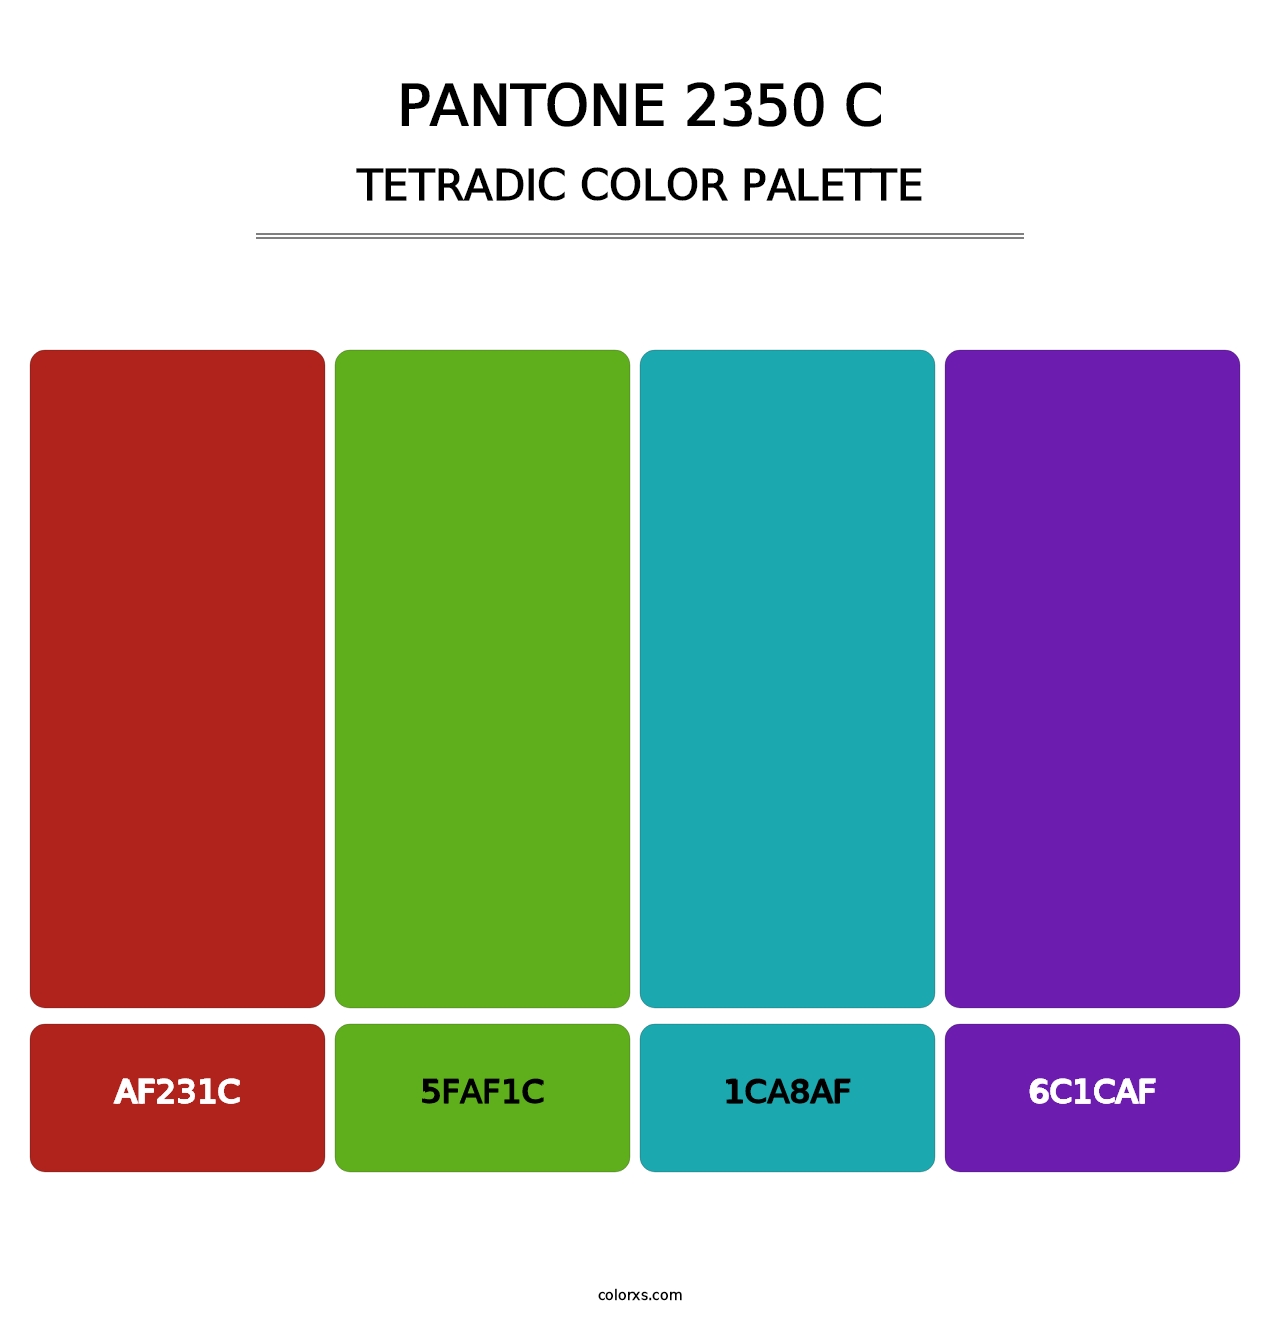 PANTONE 2350 C - Tetradic Color Palette